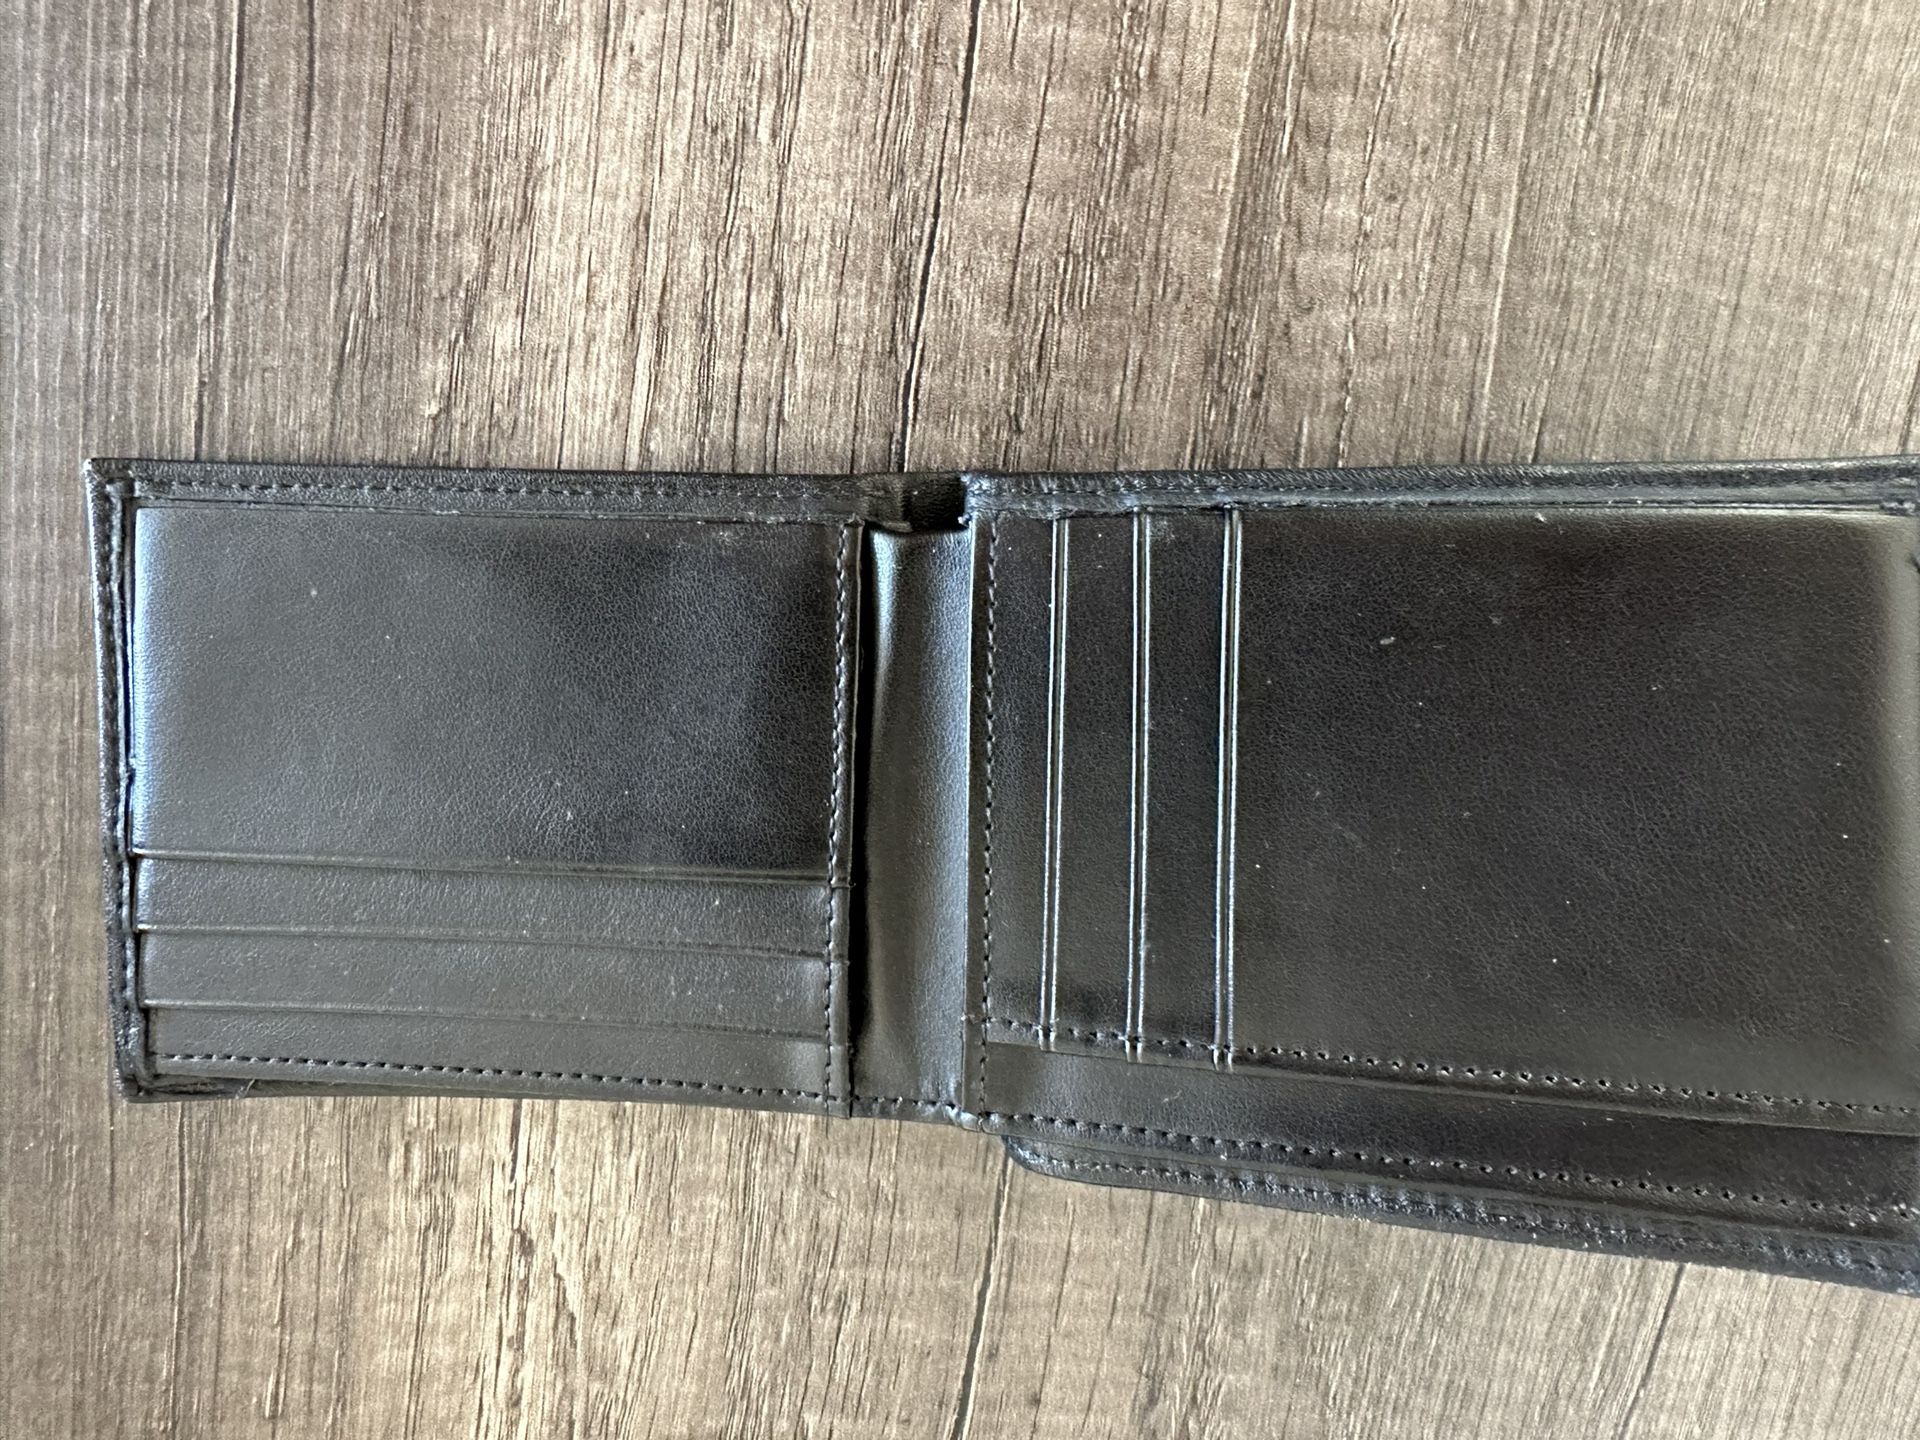 Black leather wallet, Excellent condition